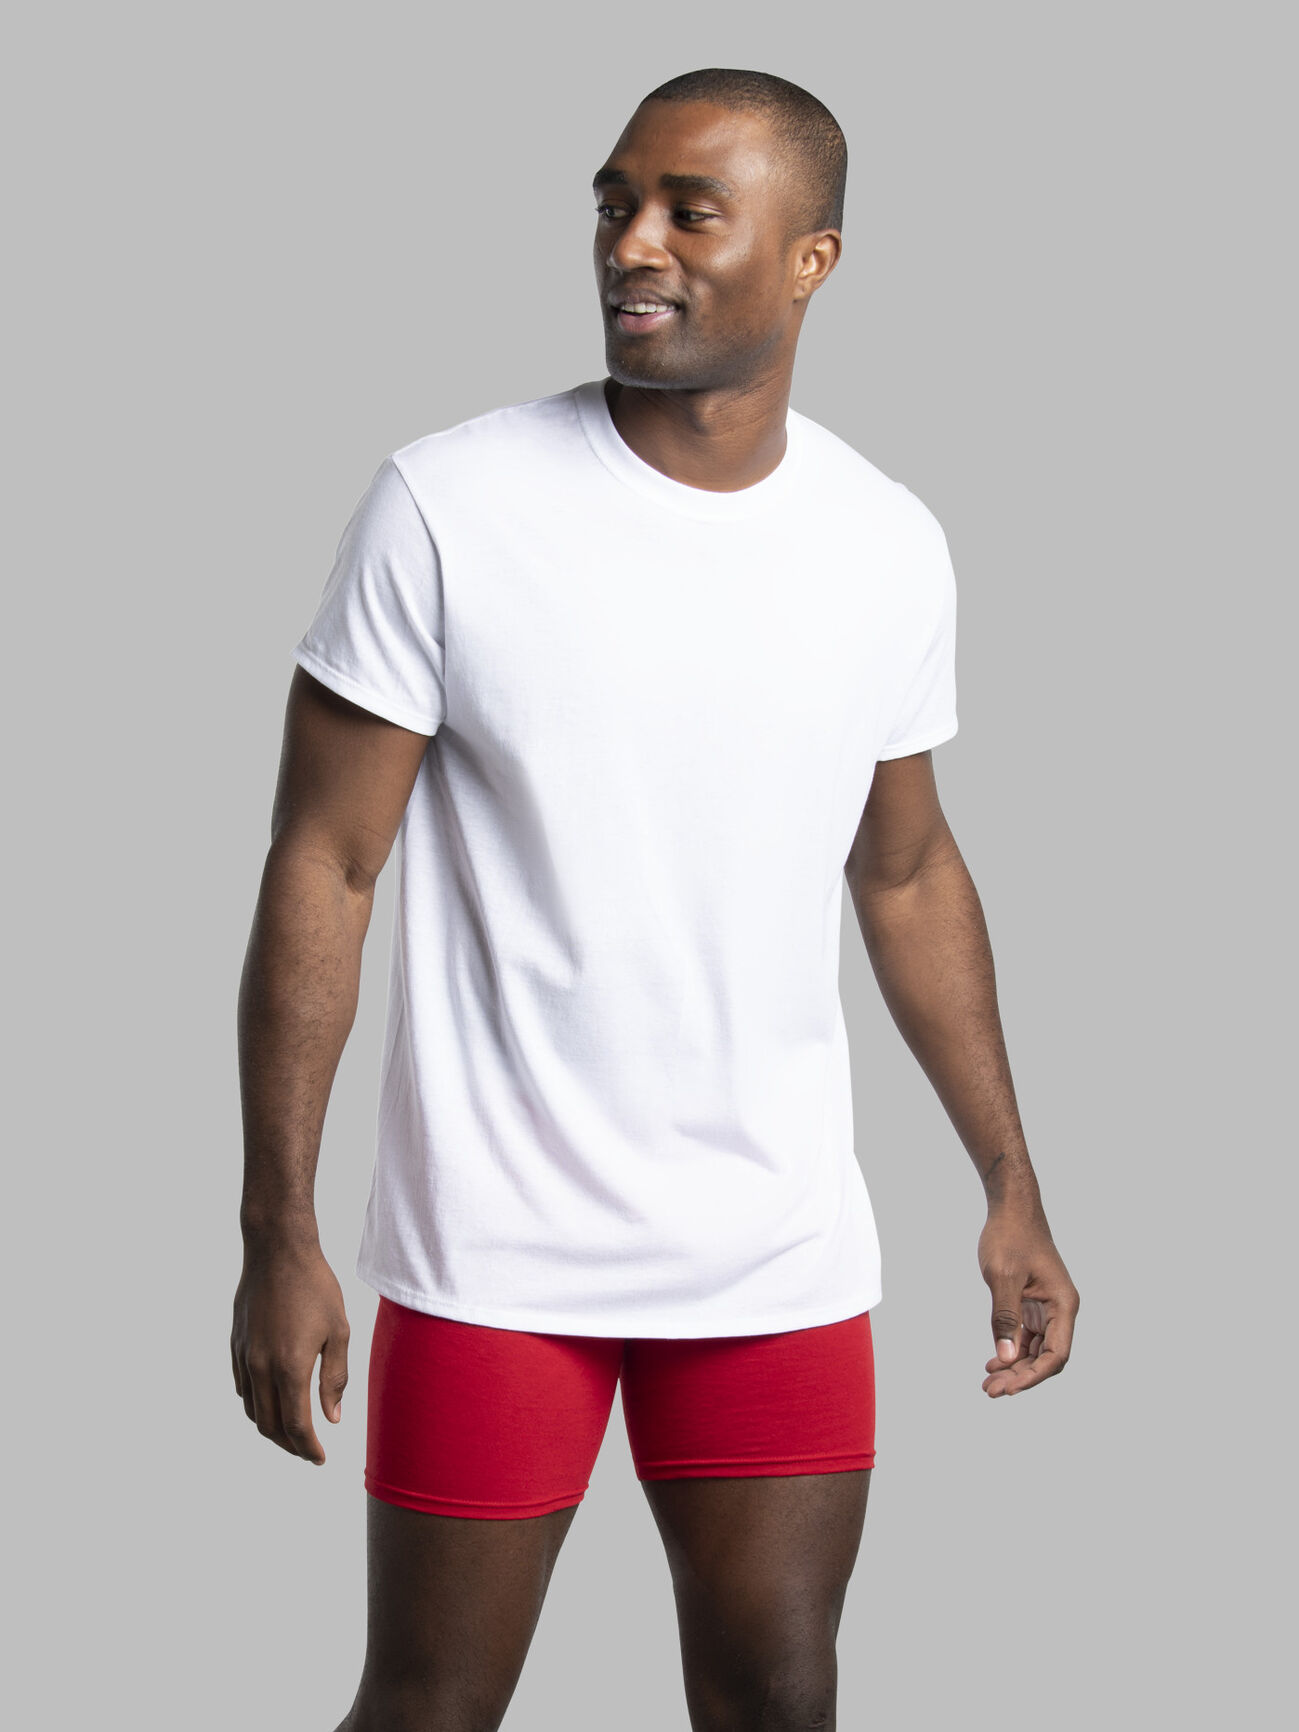 Take off Your Panties-men's Fun T-shirt-printed-small to 4XL